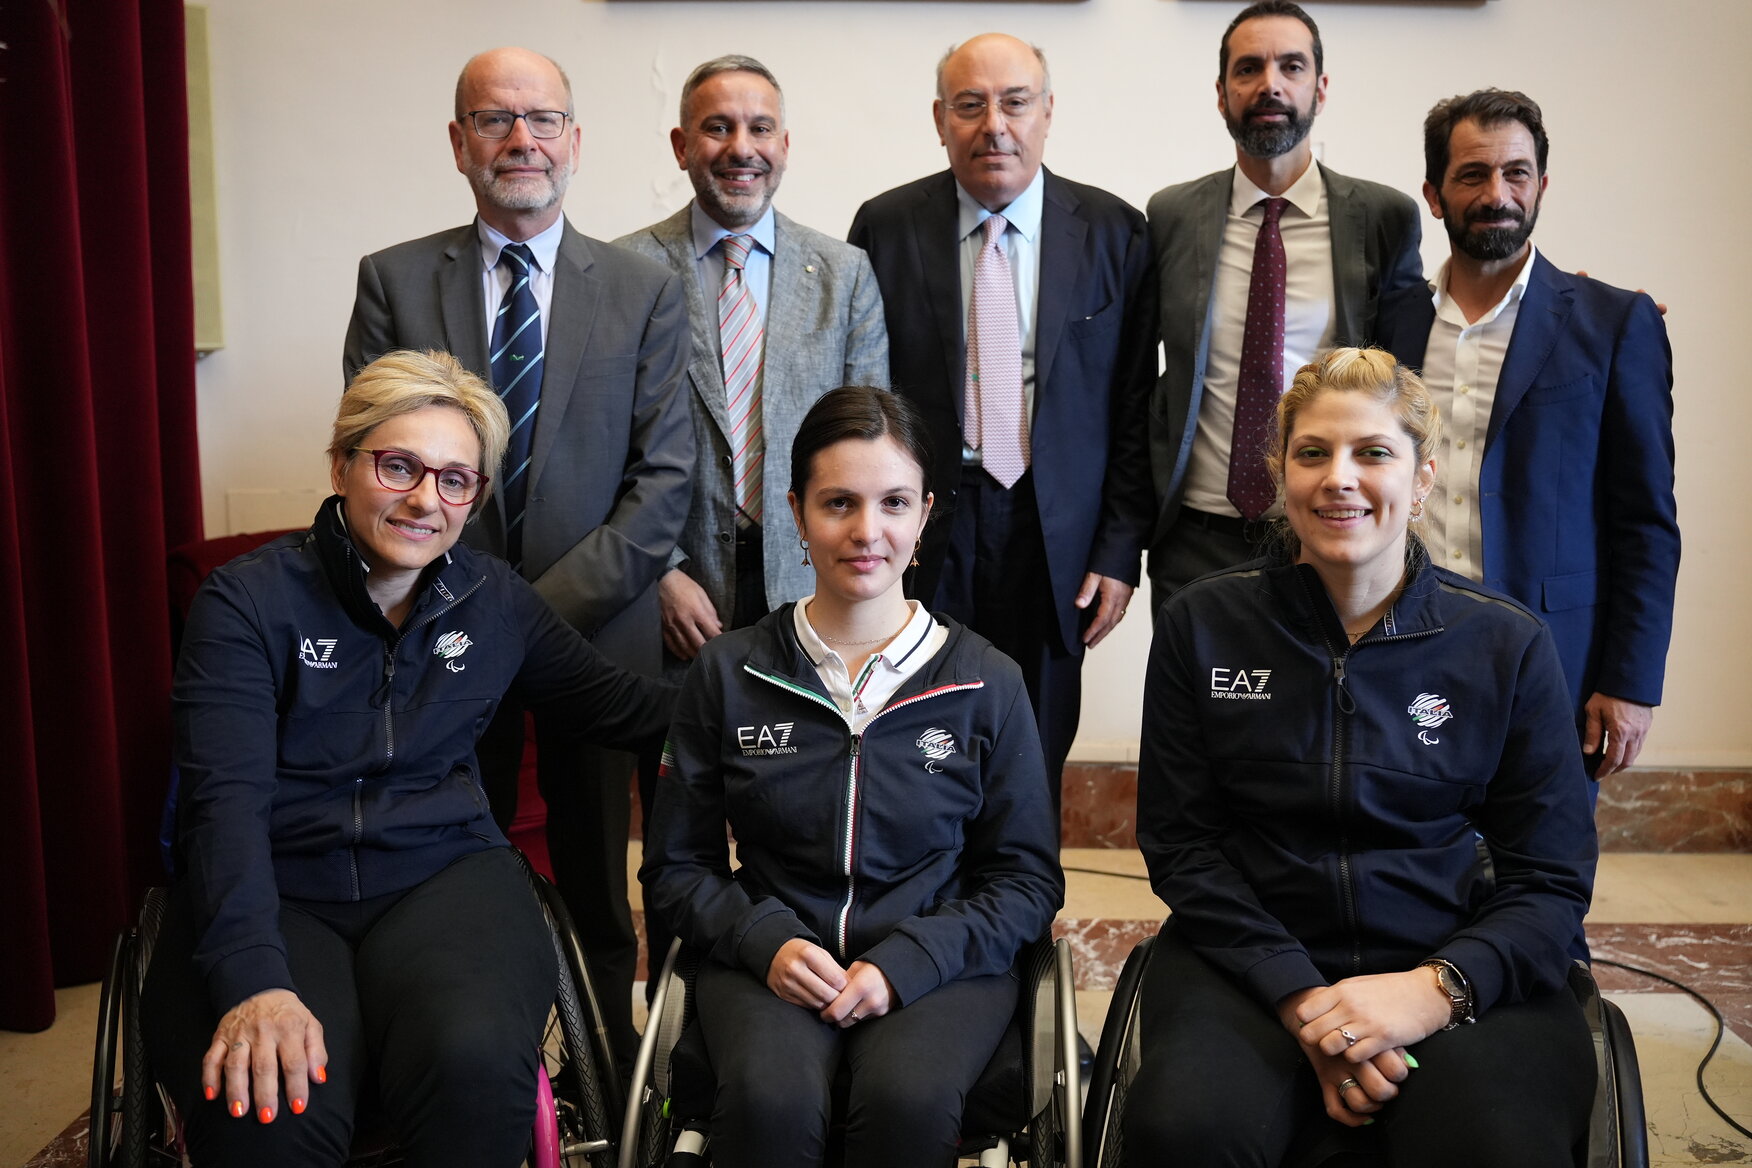 Conferenza stampa Campionati Italiani Paralimpici 2023 i relatori